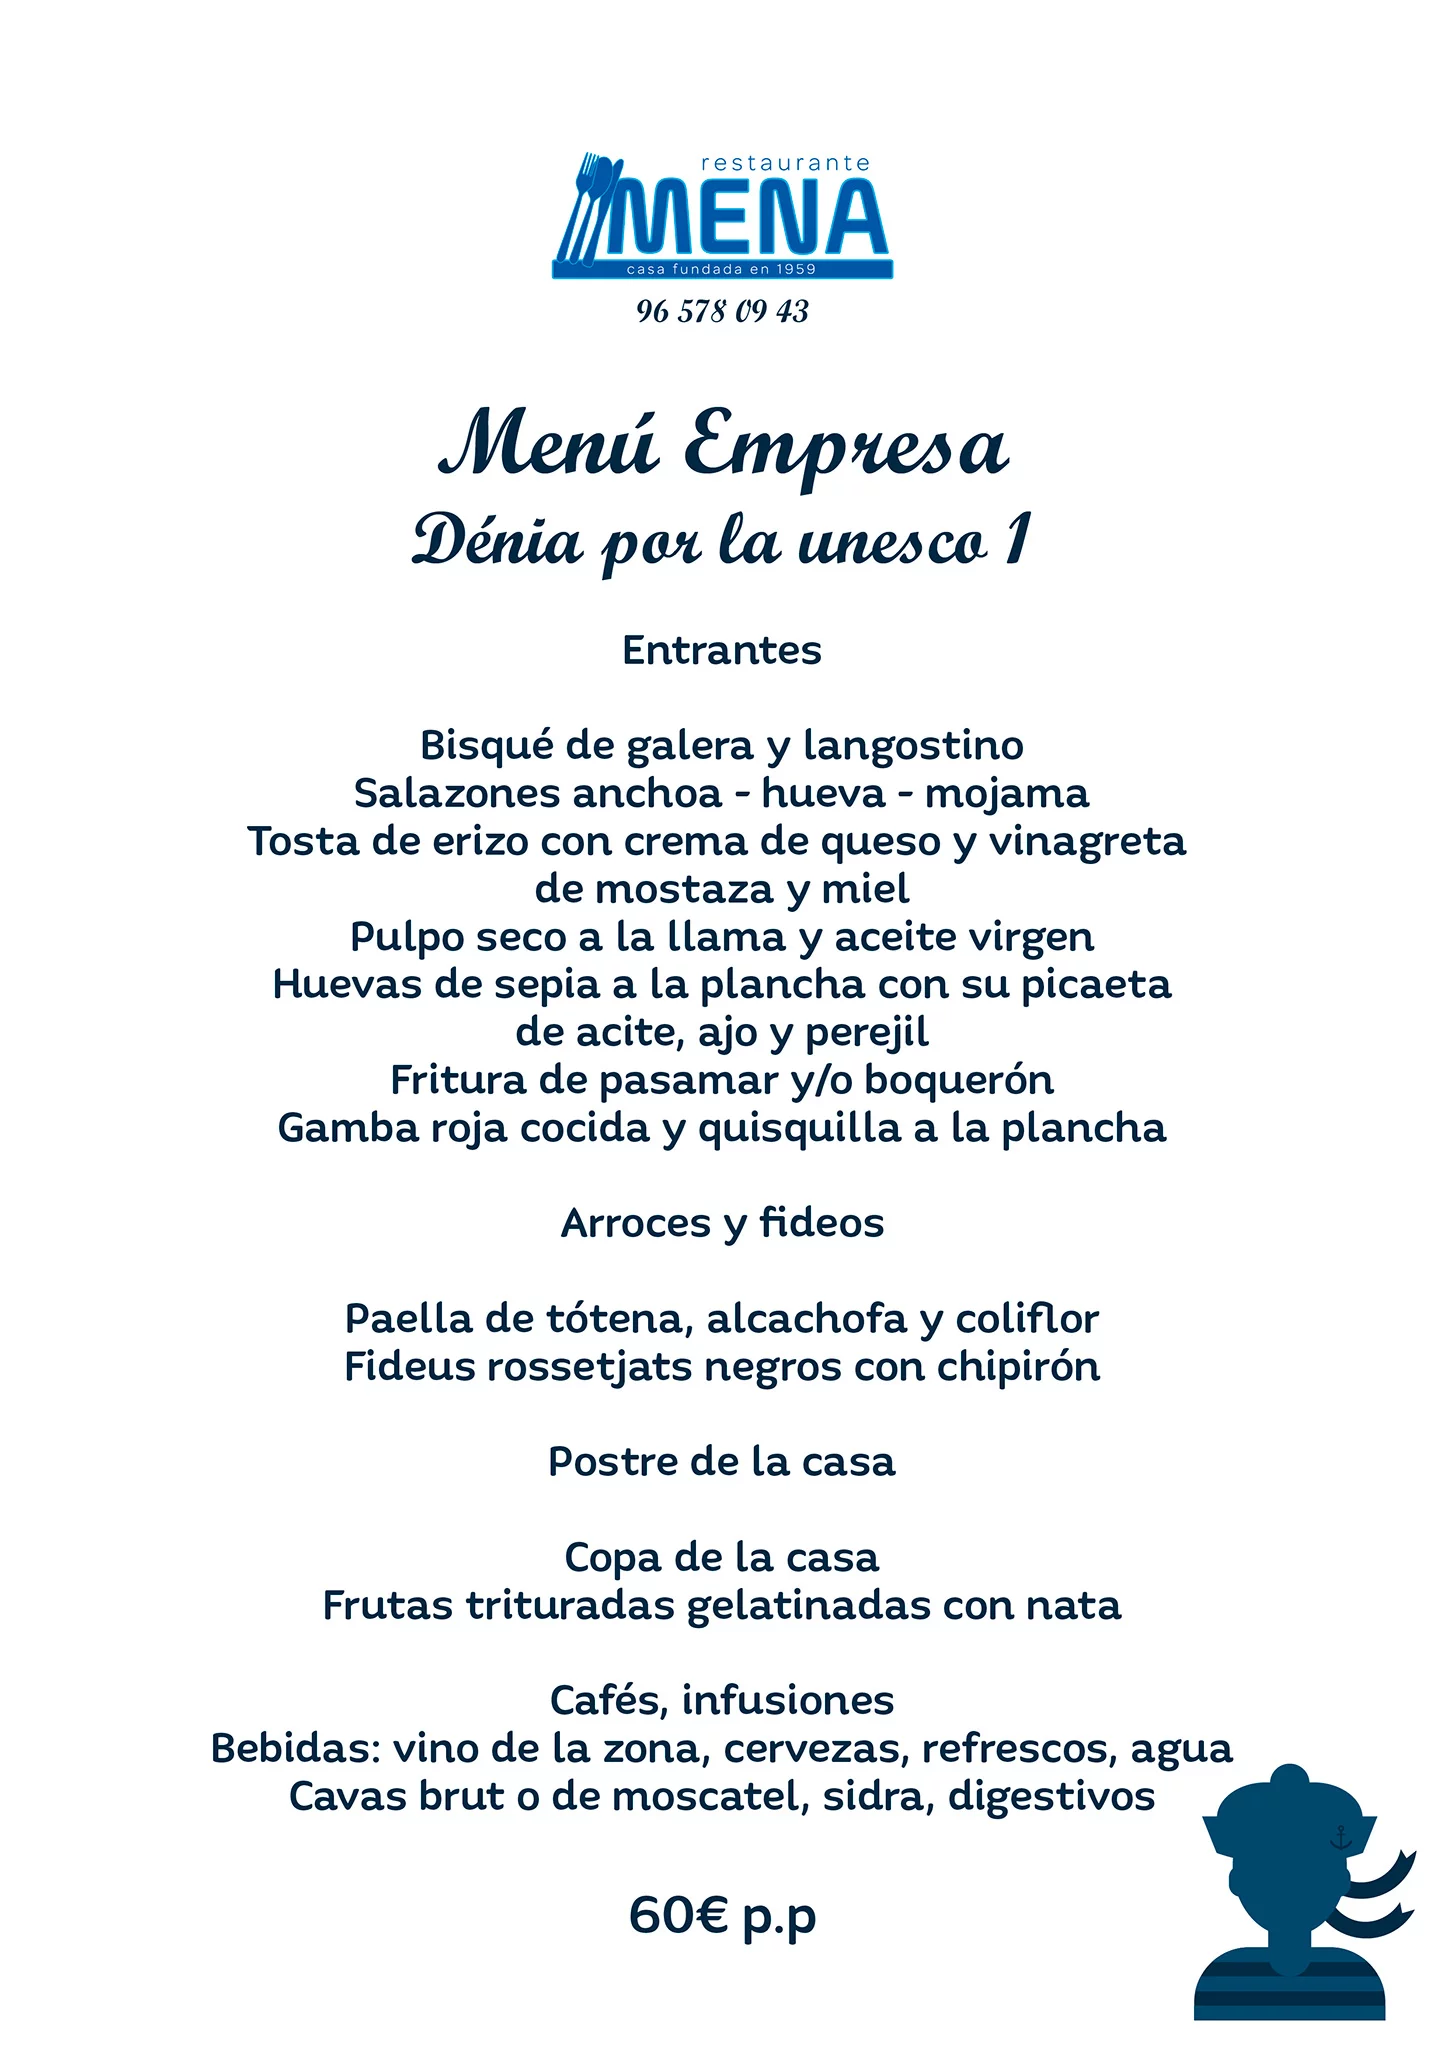 menu-de-empresa-unesco-1-restaurante-mena